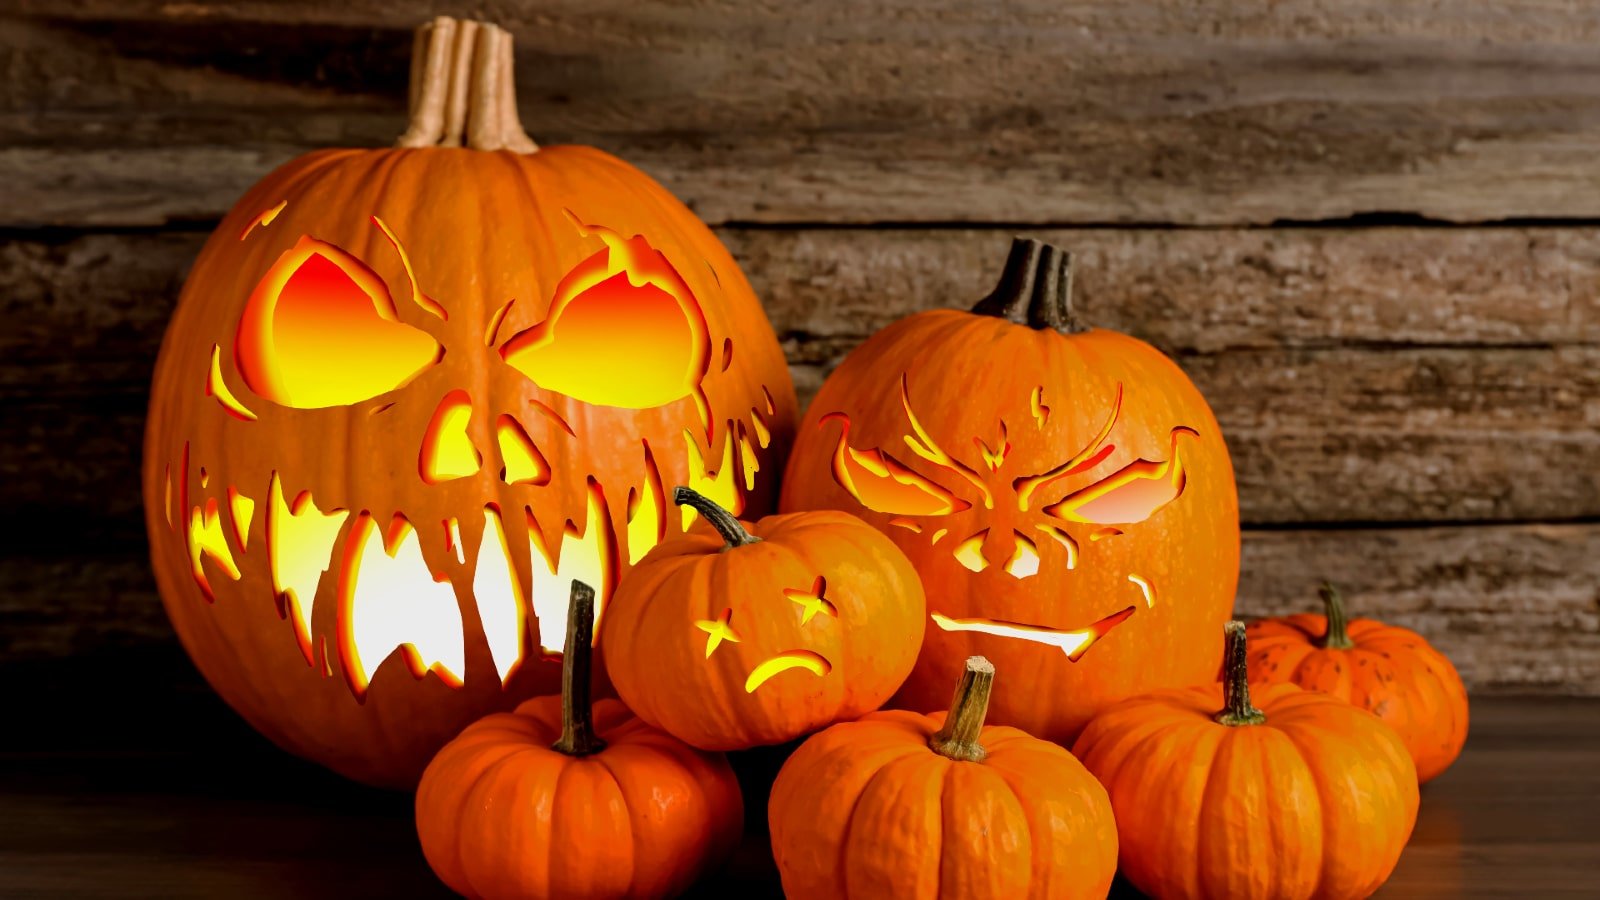 Halloween pumpkins against wood background